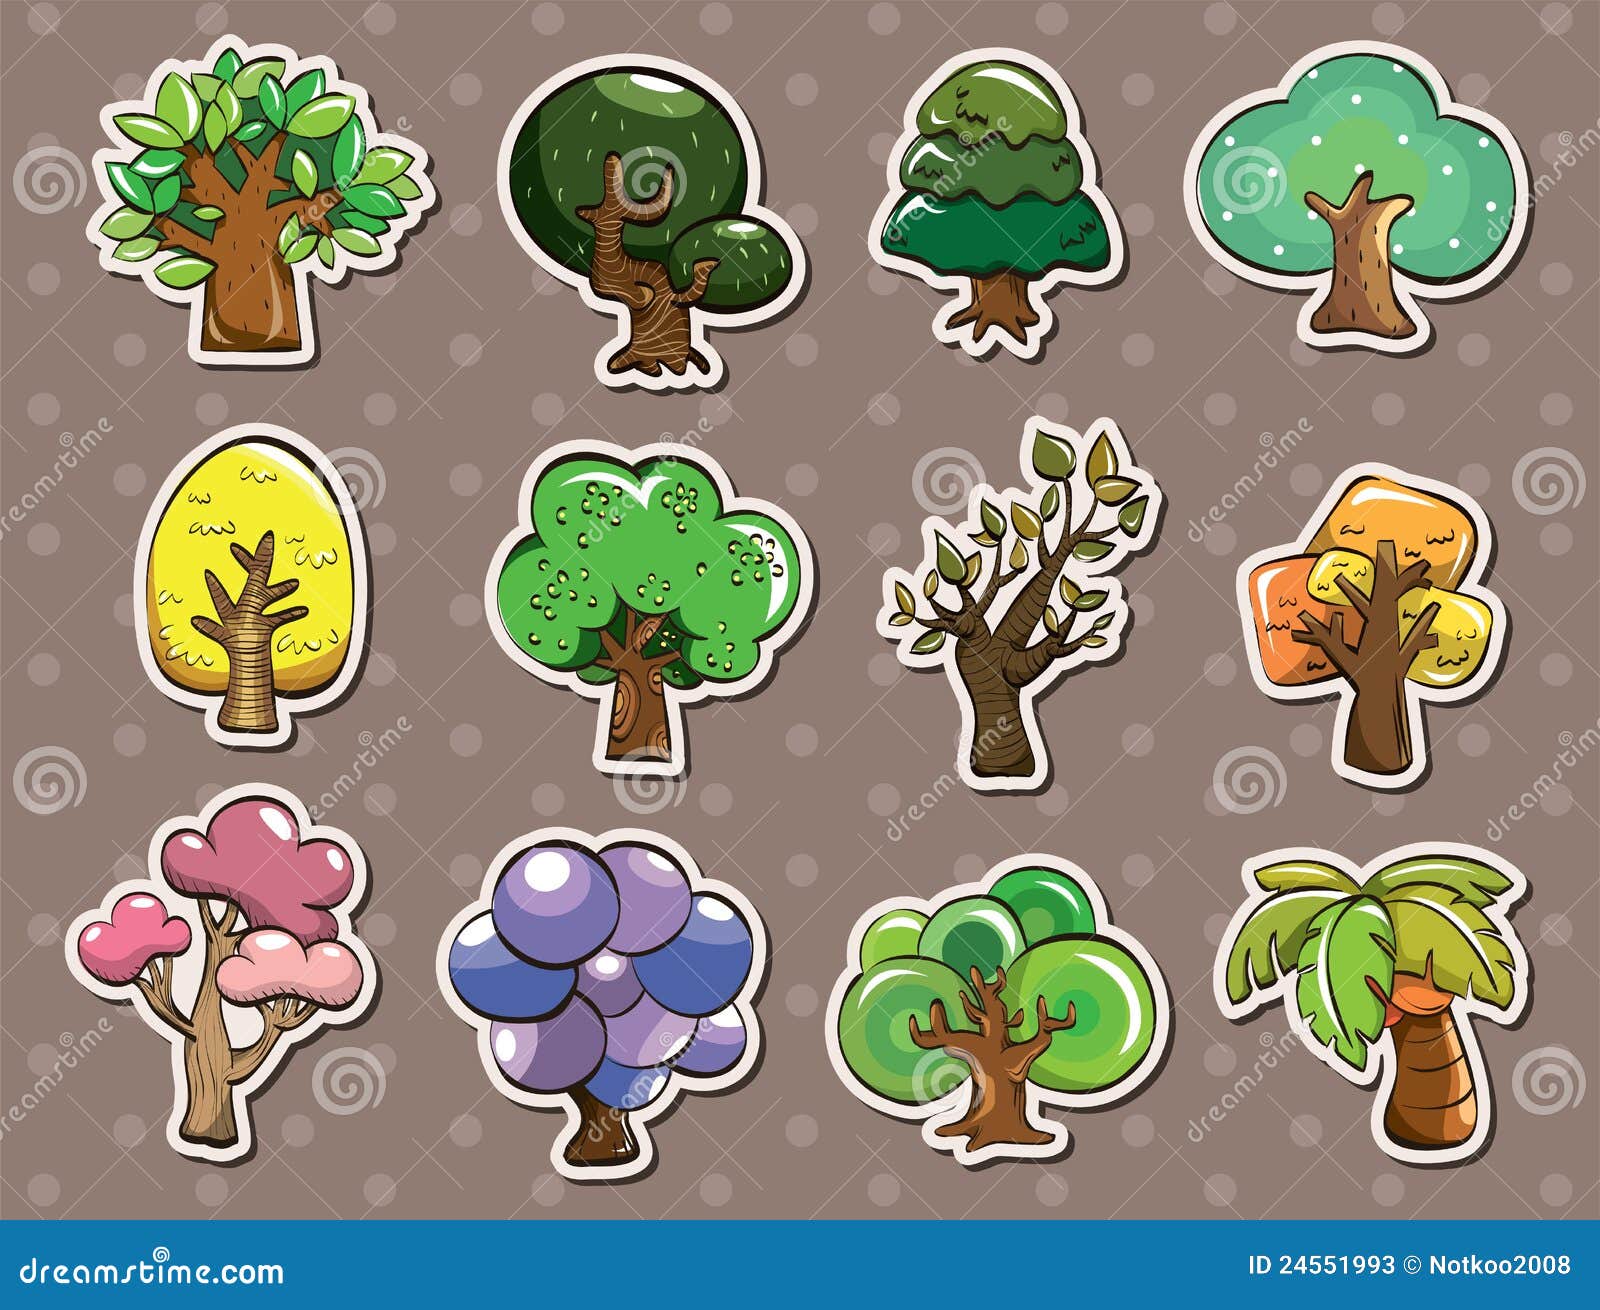 tree stickers